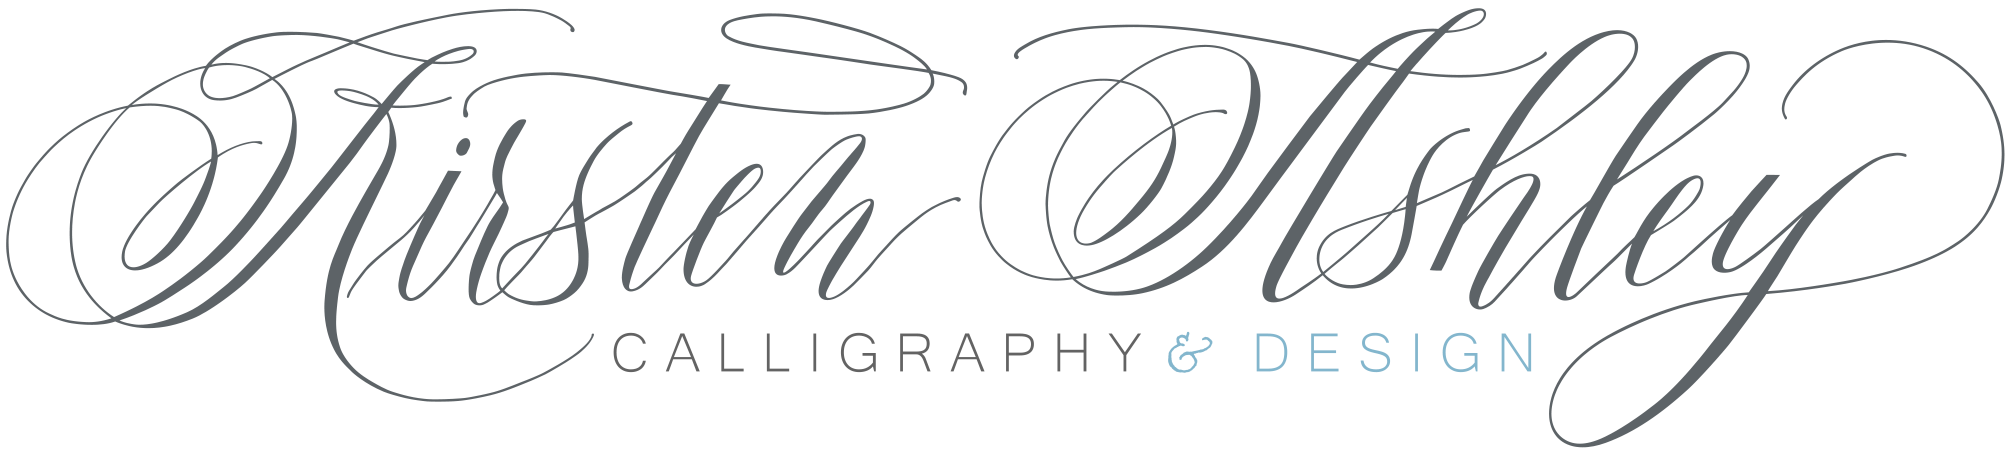 Kirsten Ashley Calligraphy & Design